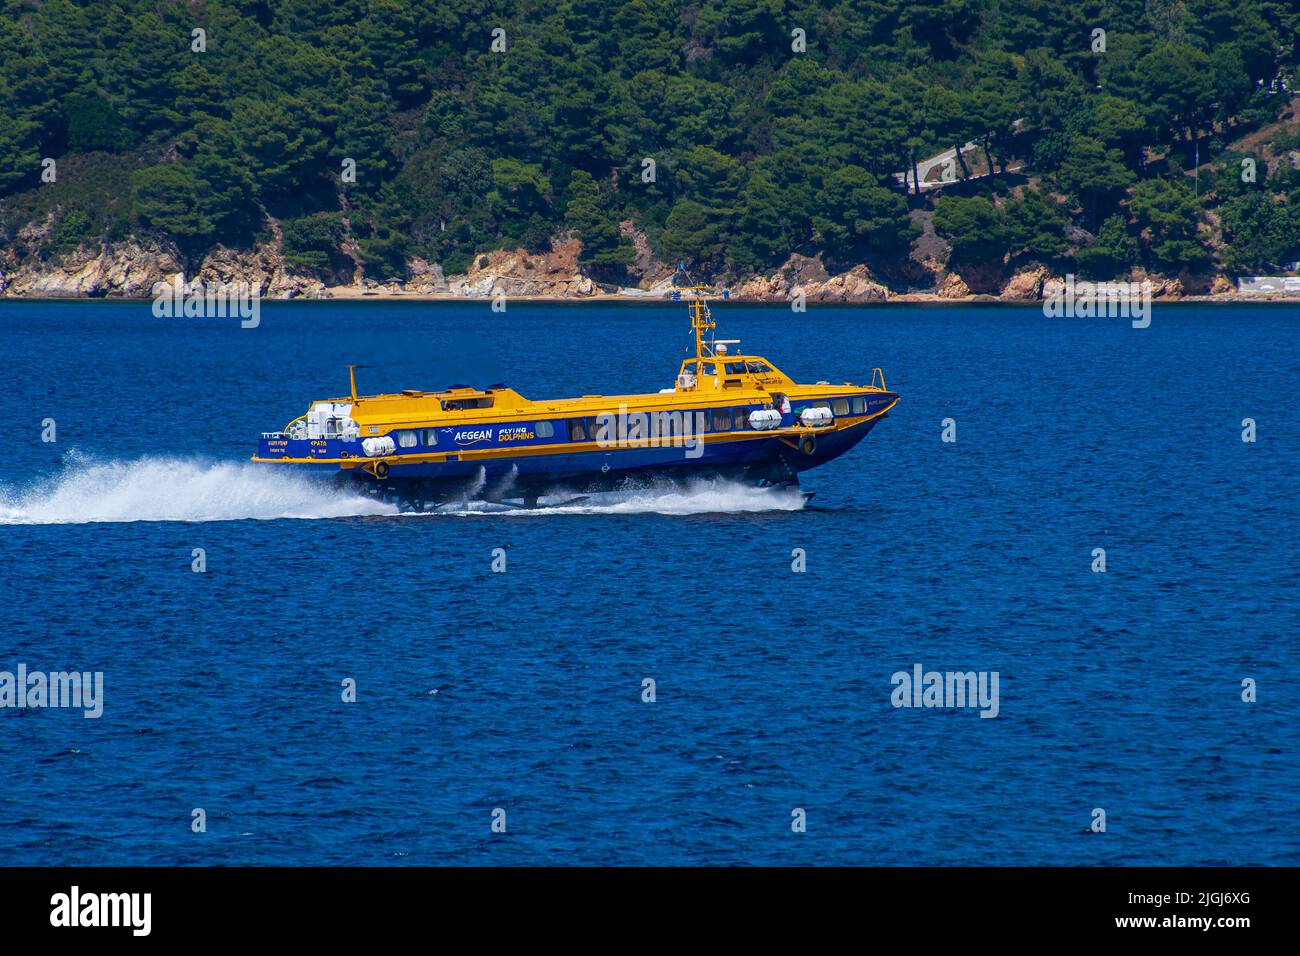 Erato flying dolphin boat from Aegean company arrives in Skiathos island, Sporades, Greece Stock Photo